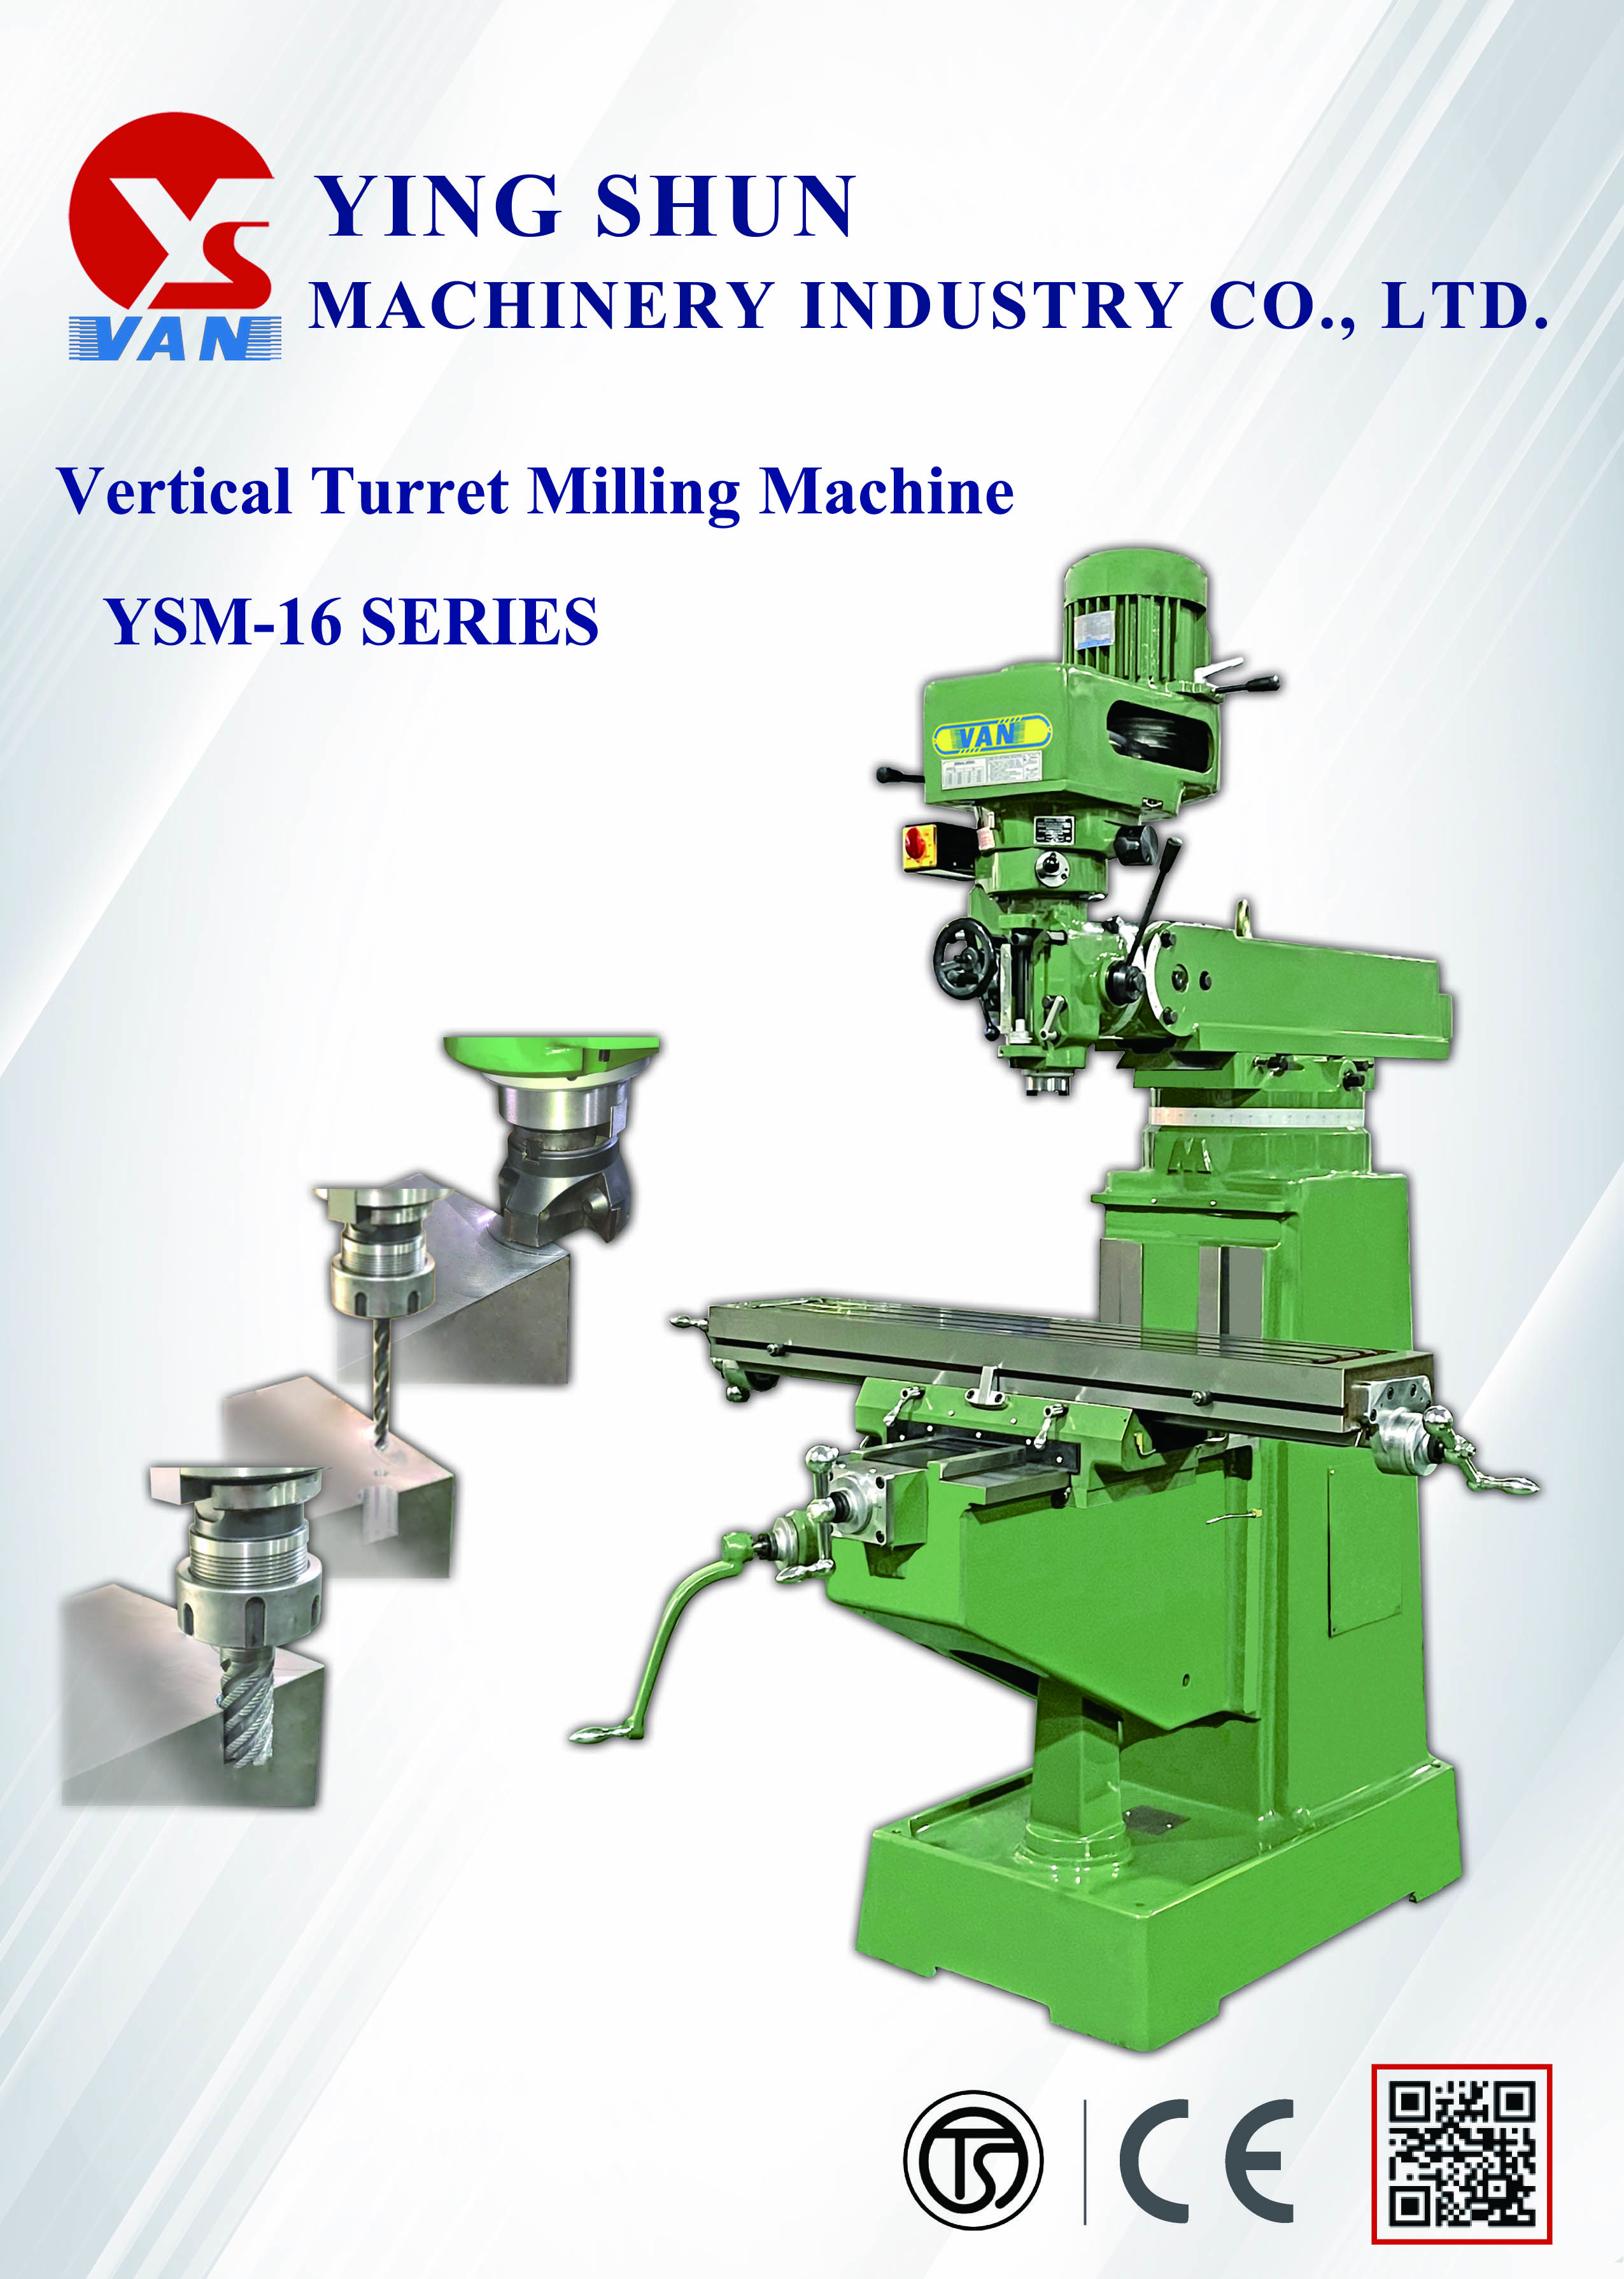 Catalog|YSM-16 series catalog